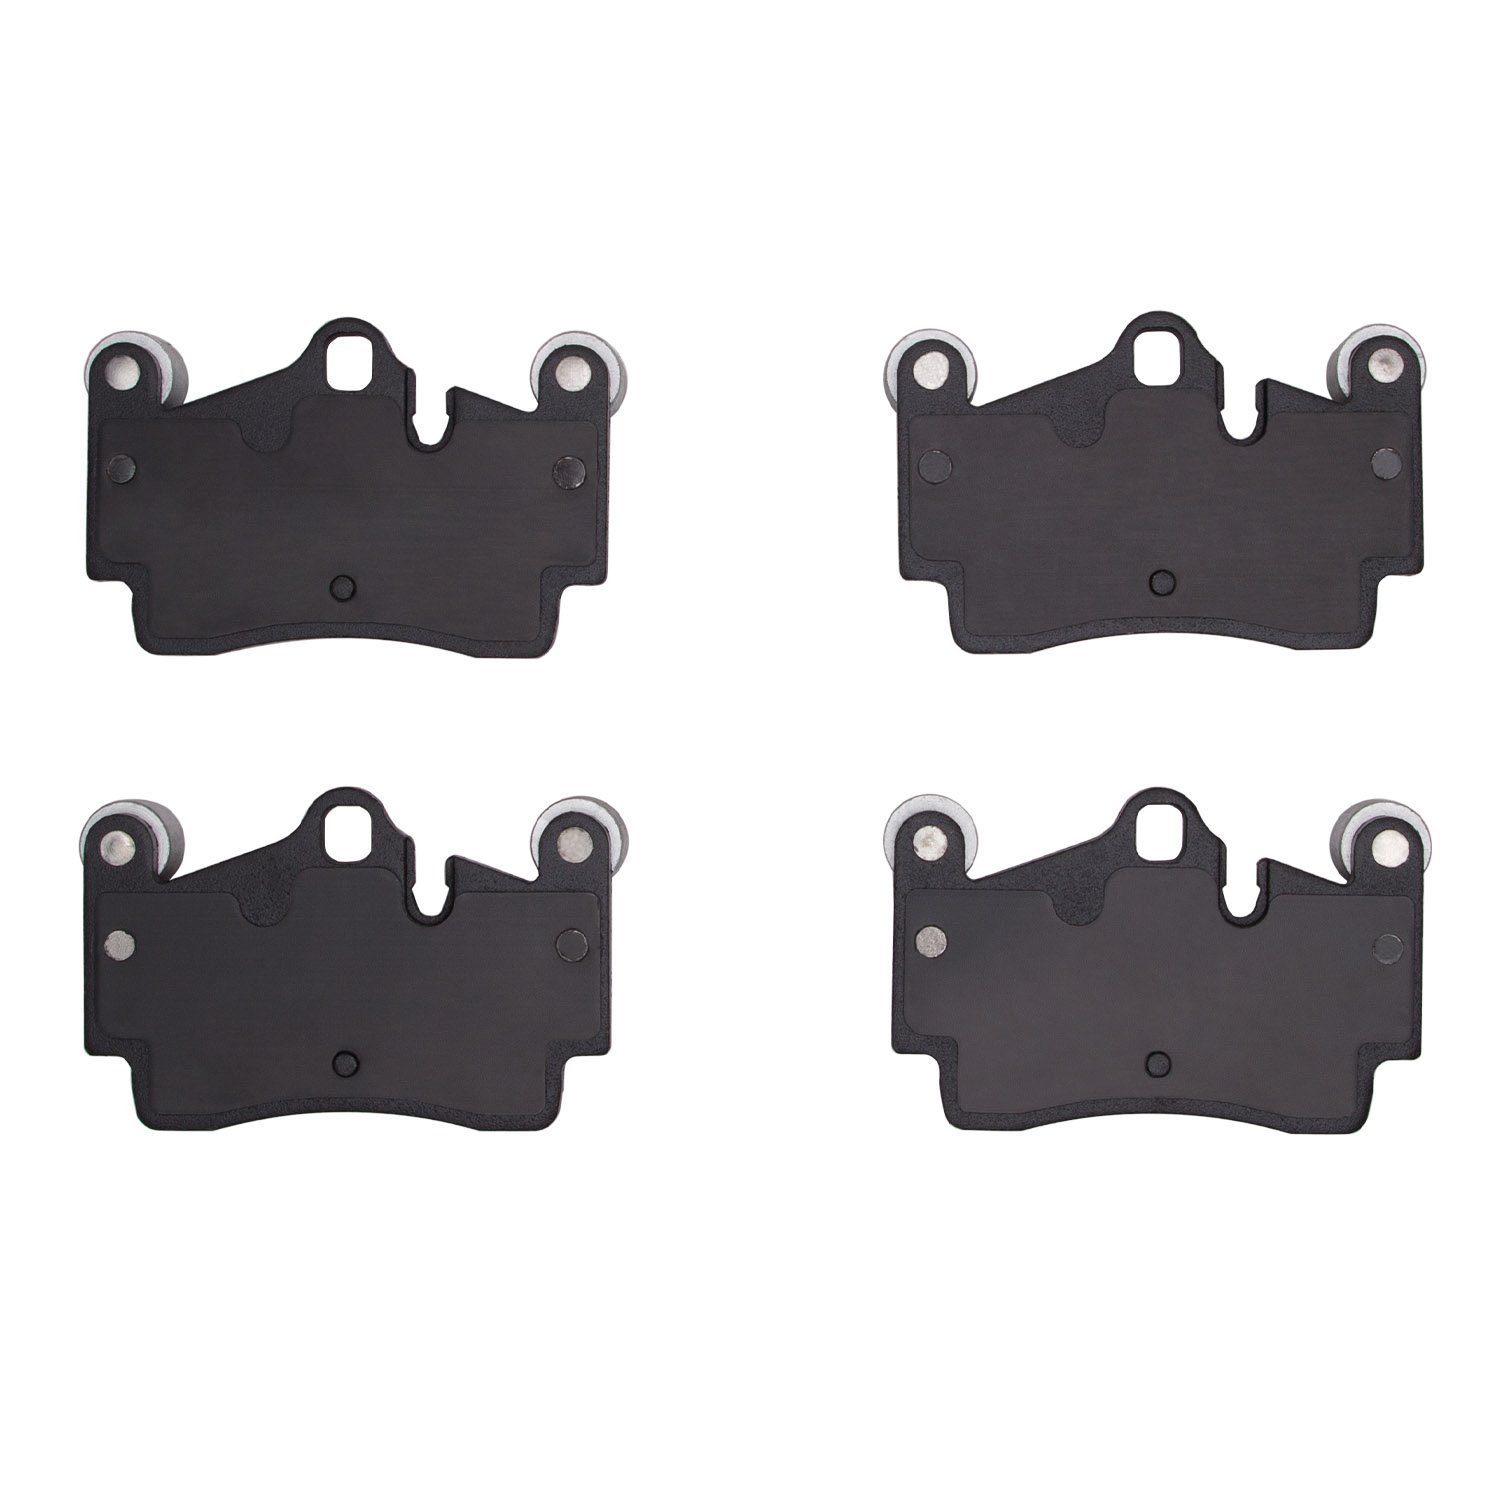 1310-0978-00 3000-Series Ceramic Brake Pads, 2003-2015 Multiple Makes/Models, Position: Rear